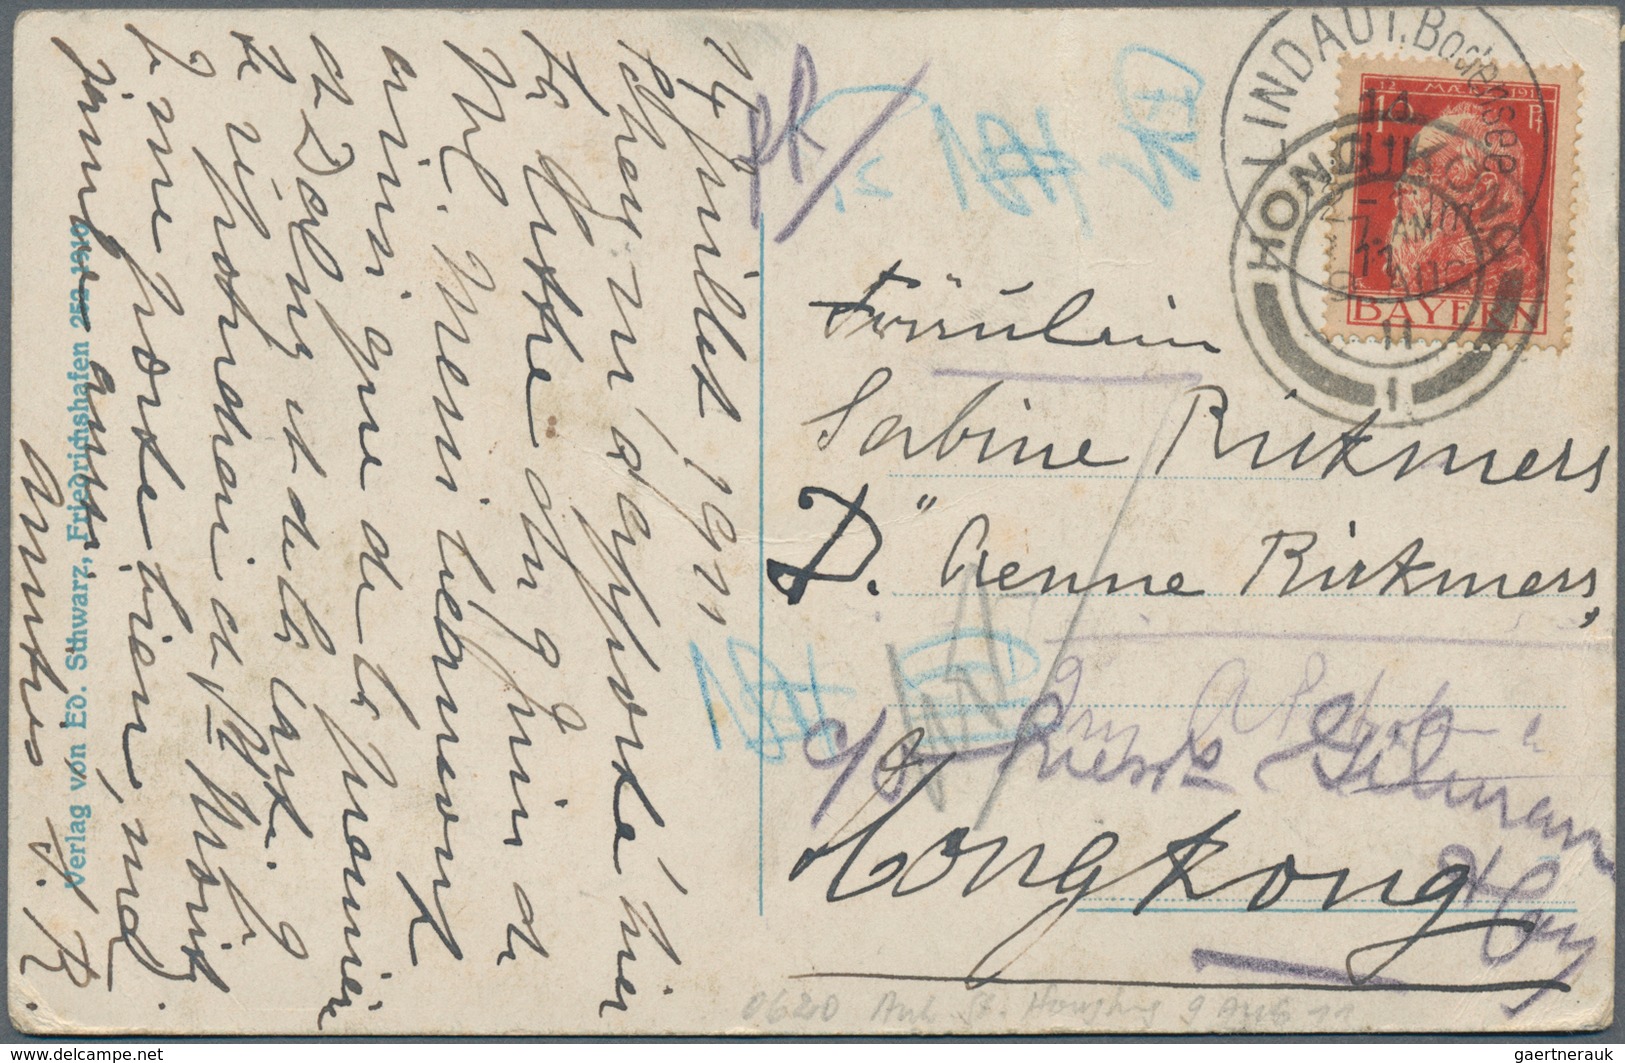 Hongkong: 1880/1953 (ca.), mainly QV/KEVII, mint/used stationery cards (30), used/cto stationery env